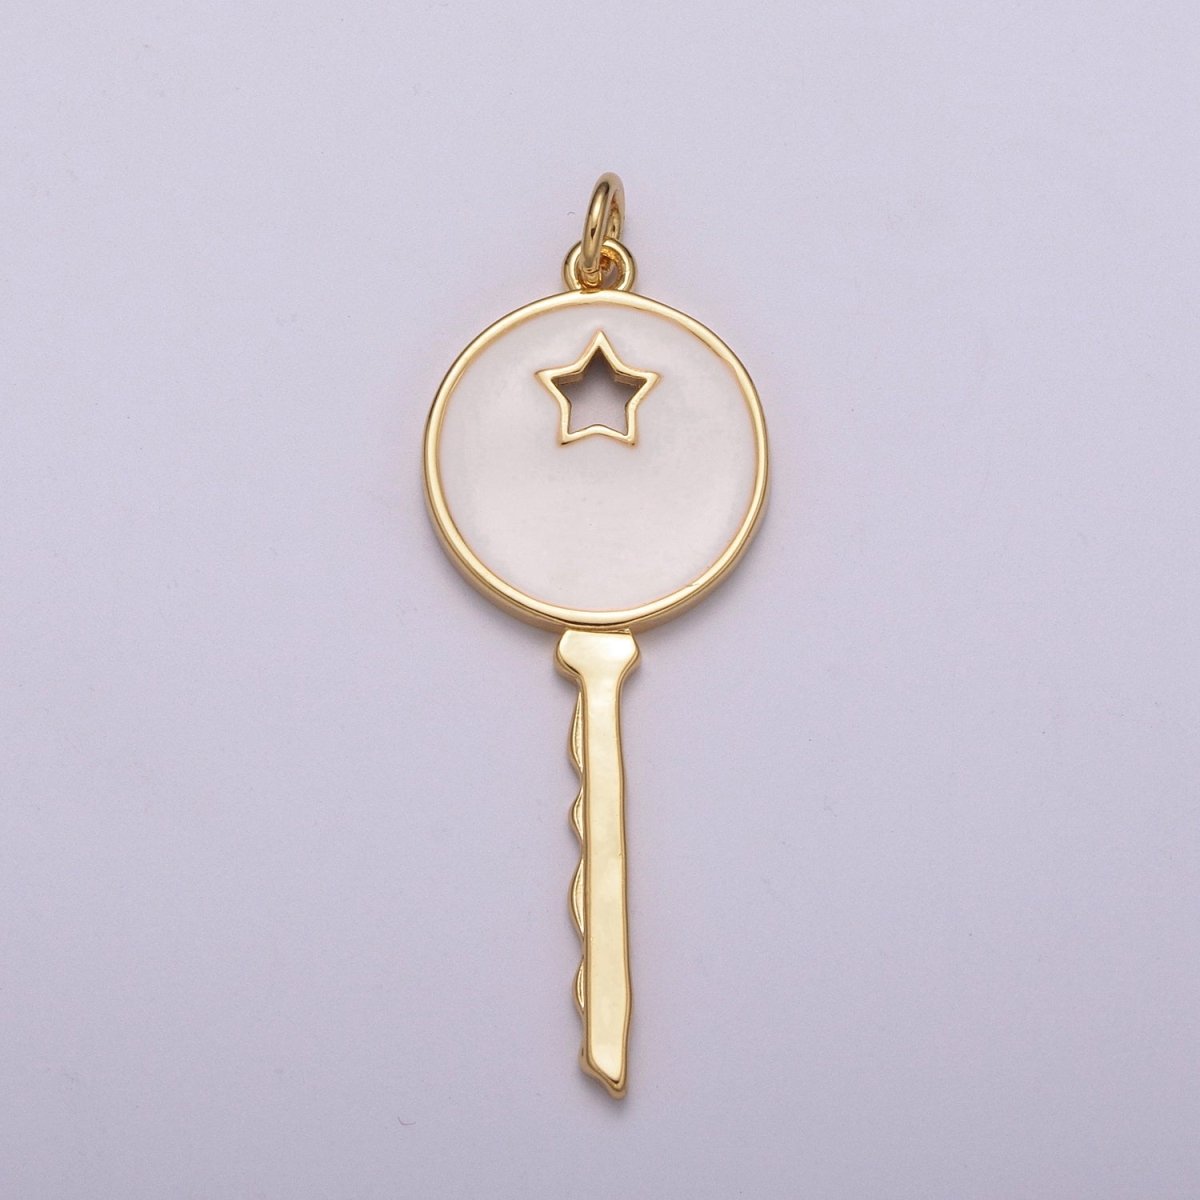 14K Gold Filled Key Pendant Enamel Key Charm Star Celestial Jewelry Making Crafting Supplies M-815 - M-817 - DLUXCA